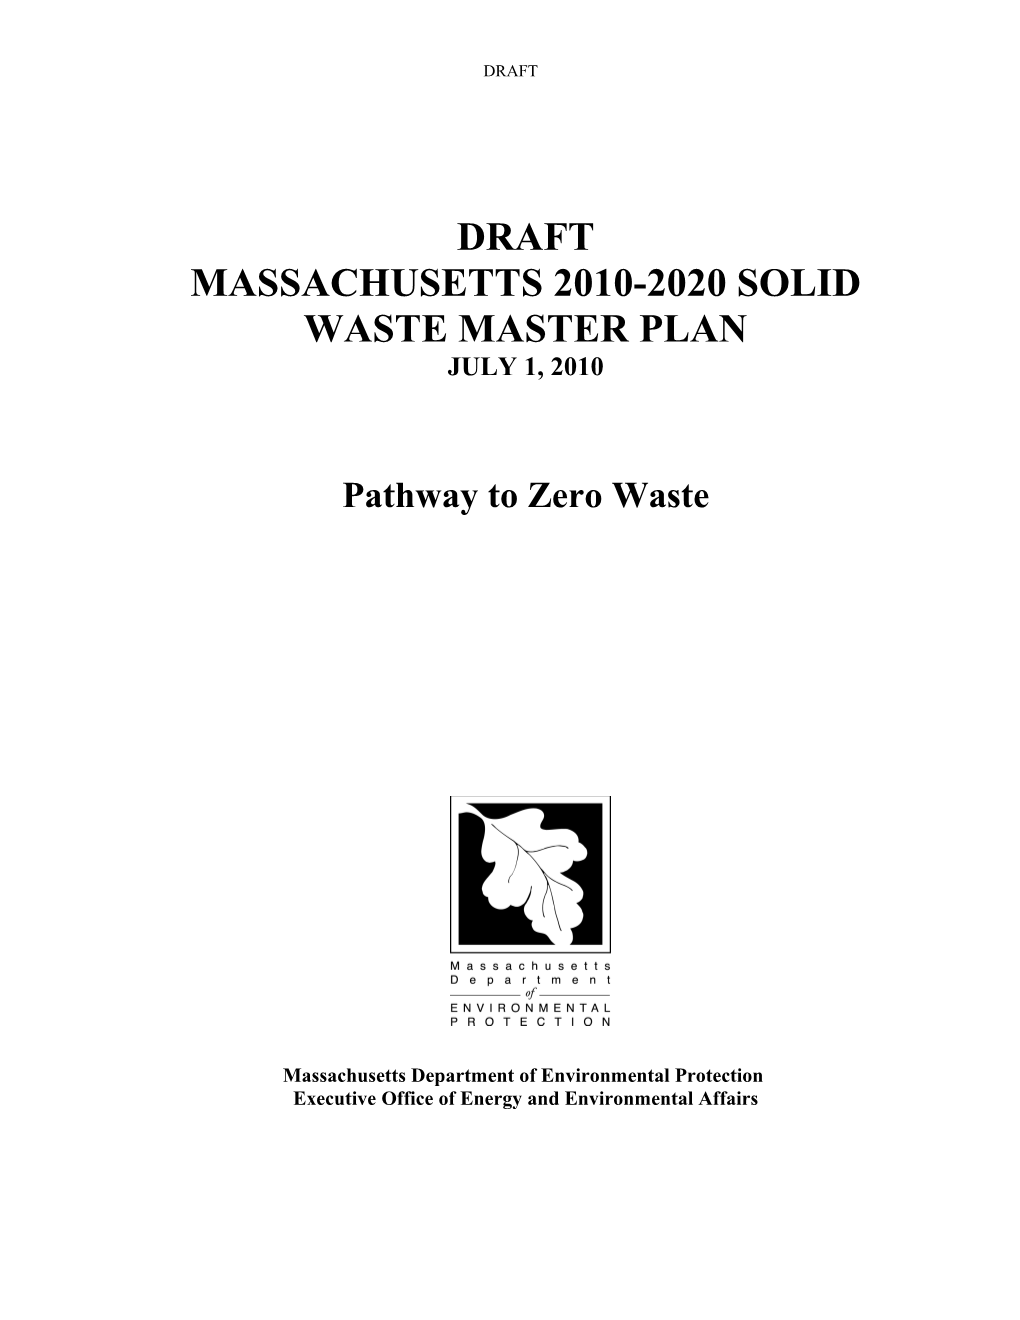 Massachusetts 2010-2020 Solid Waste Master Plan